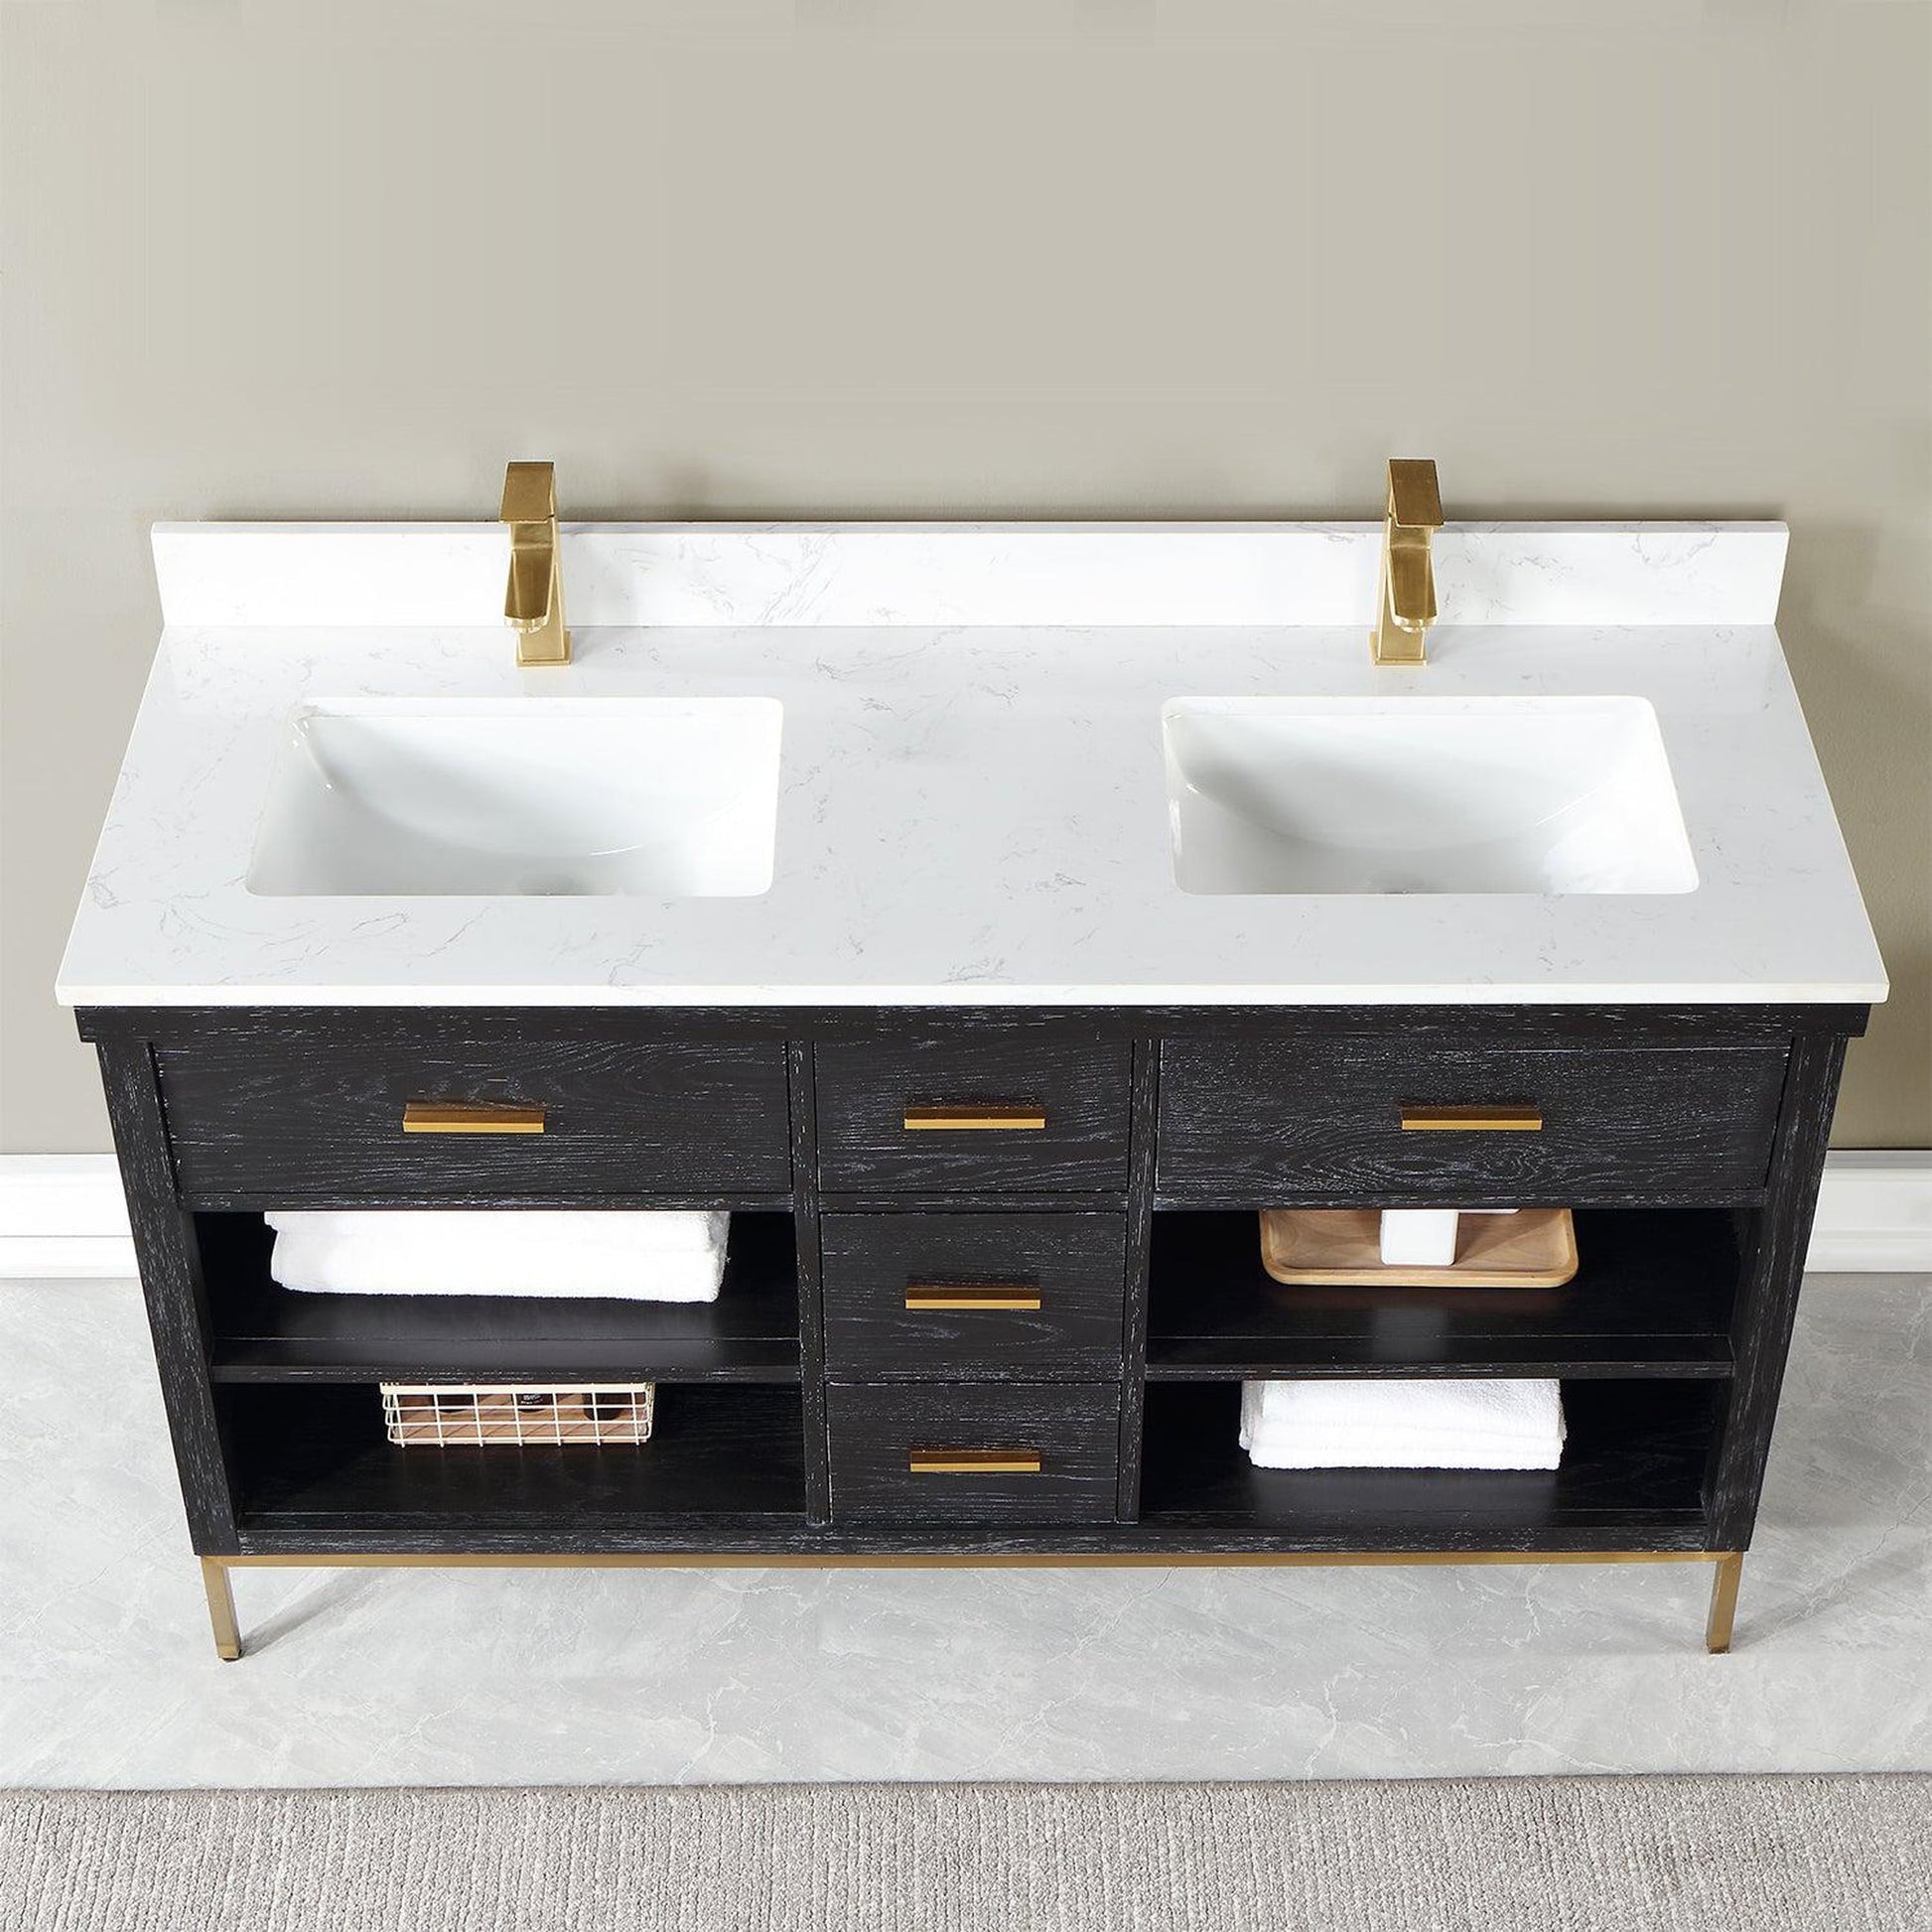 Altair Kesia 60" Black Oak Freestanding Double Bathroom Vanity Set With Stylish Aosta White Composite Stone Top, Two Rectangular Undermount Ceramic Sinks, Overflow, and Backsplash